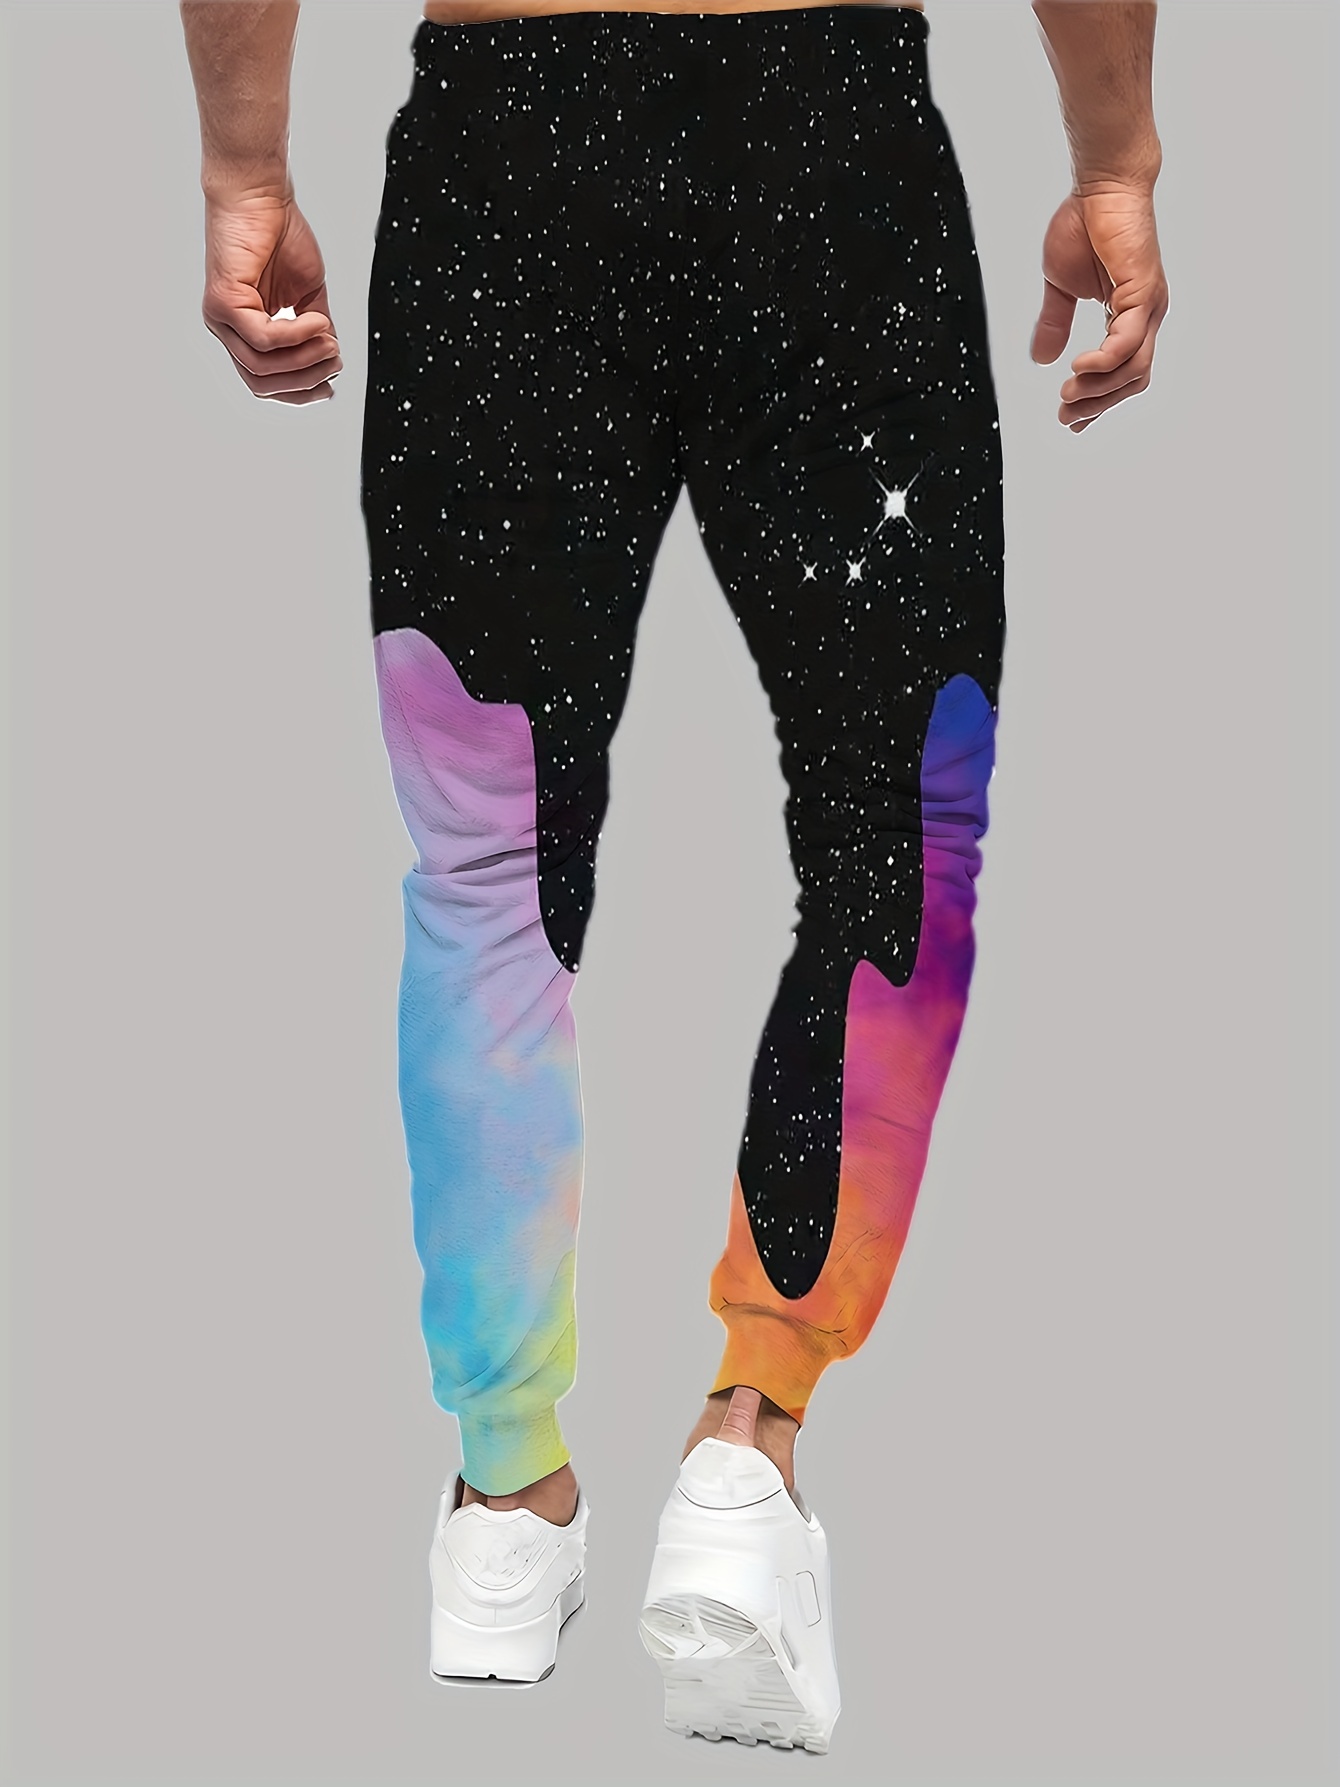 Cool galaxy joggers  Mens pants fashion, Tapered joggers, Mens jogger pants